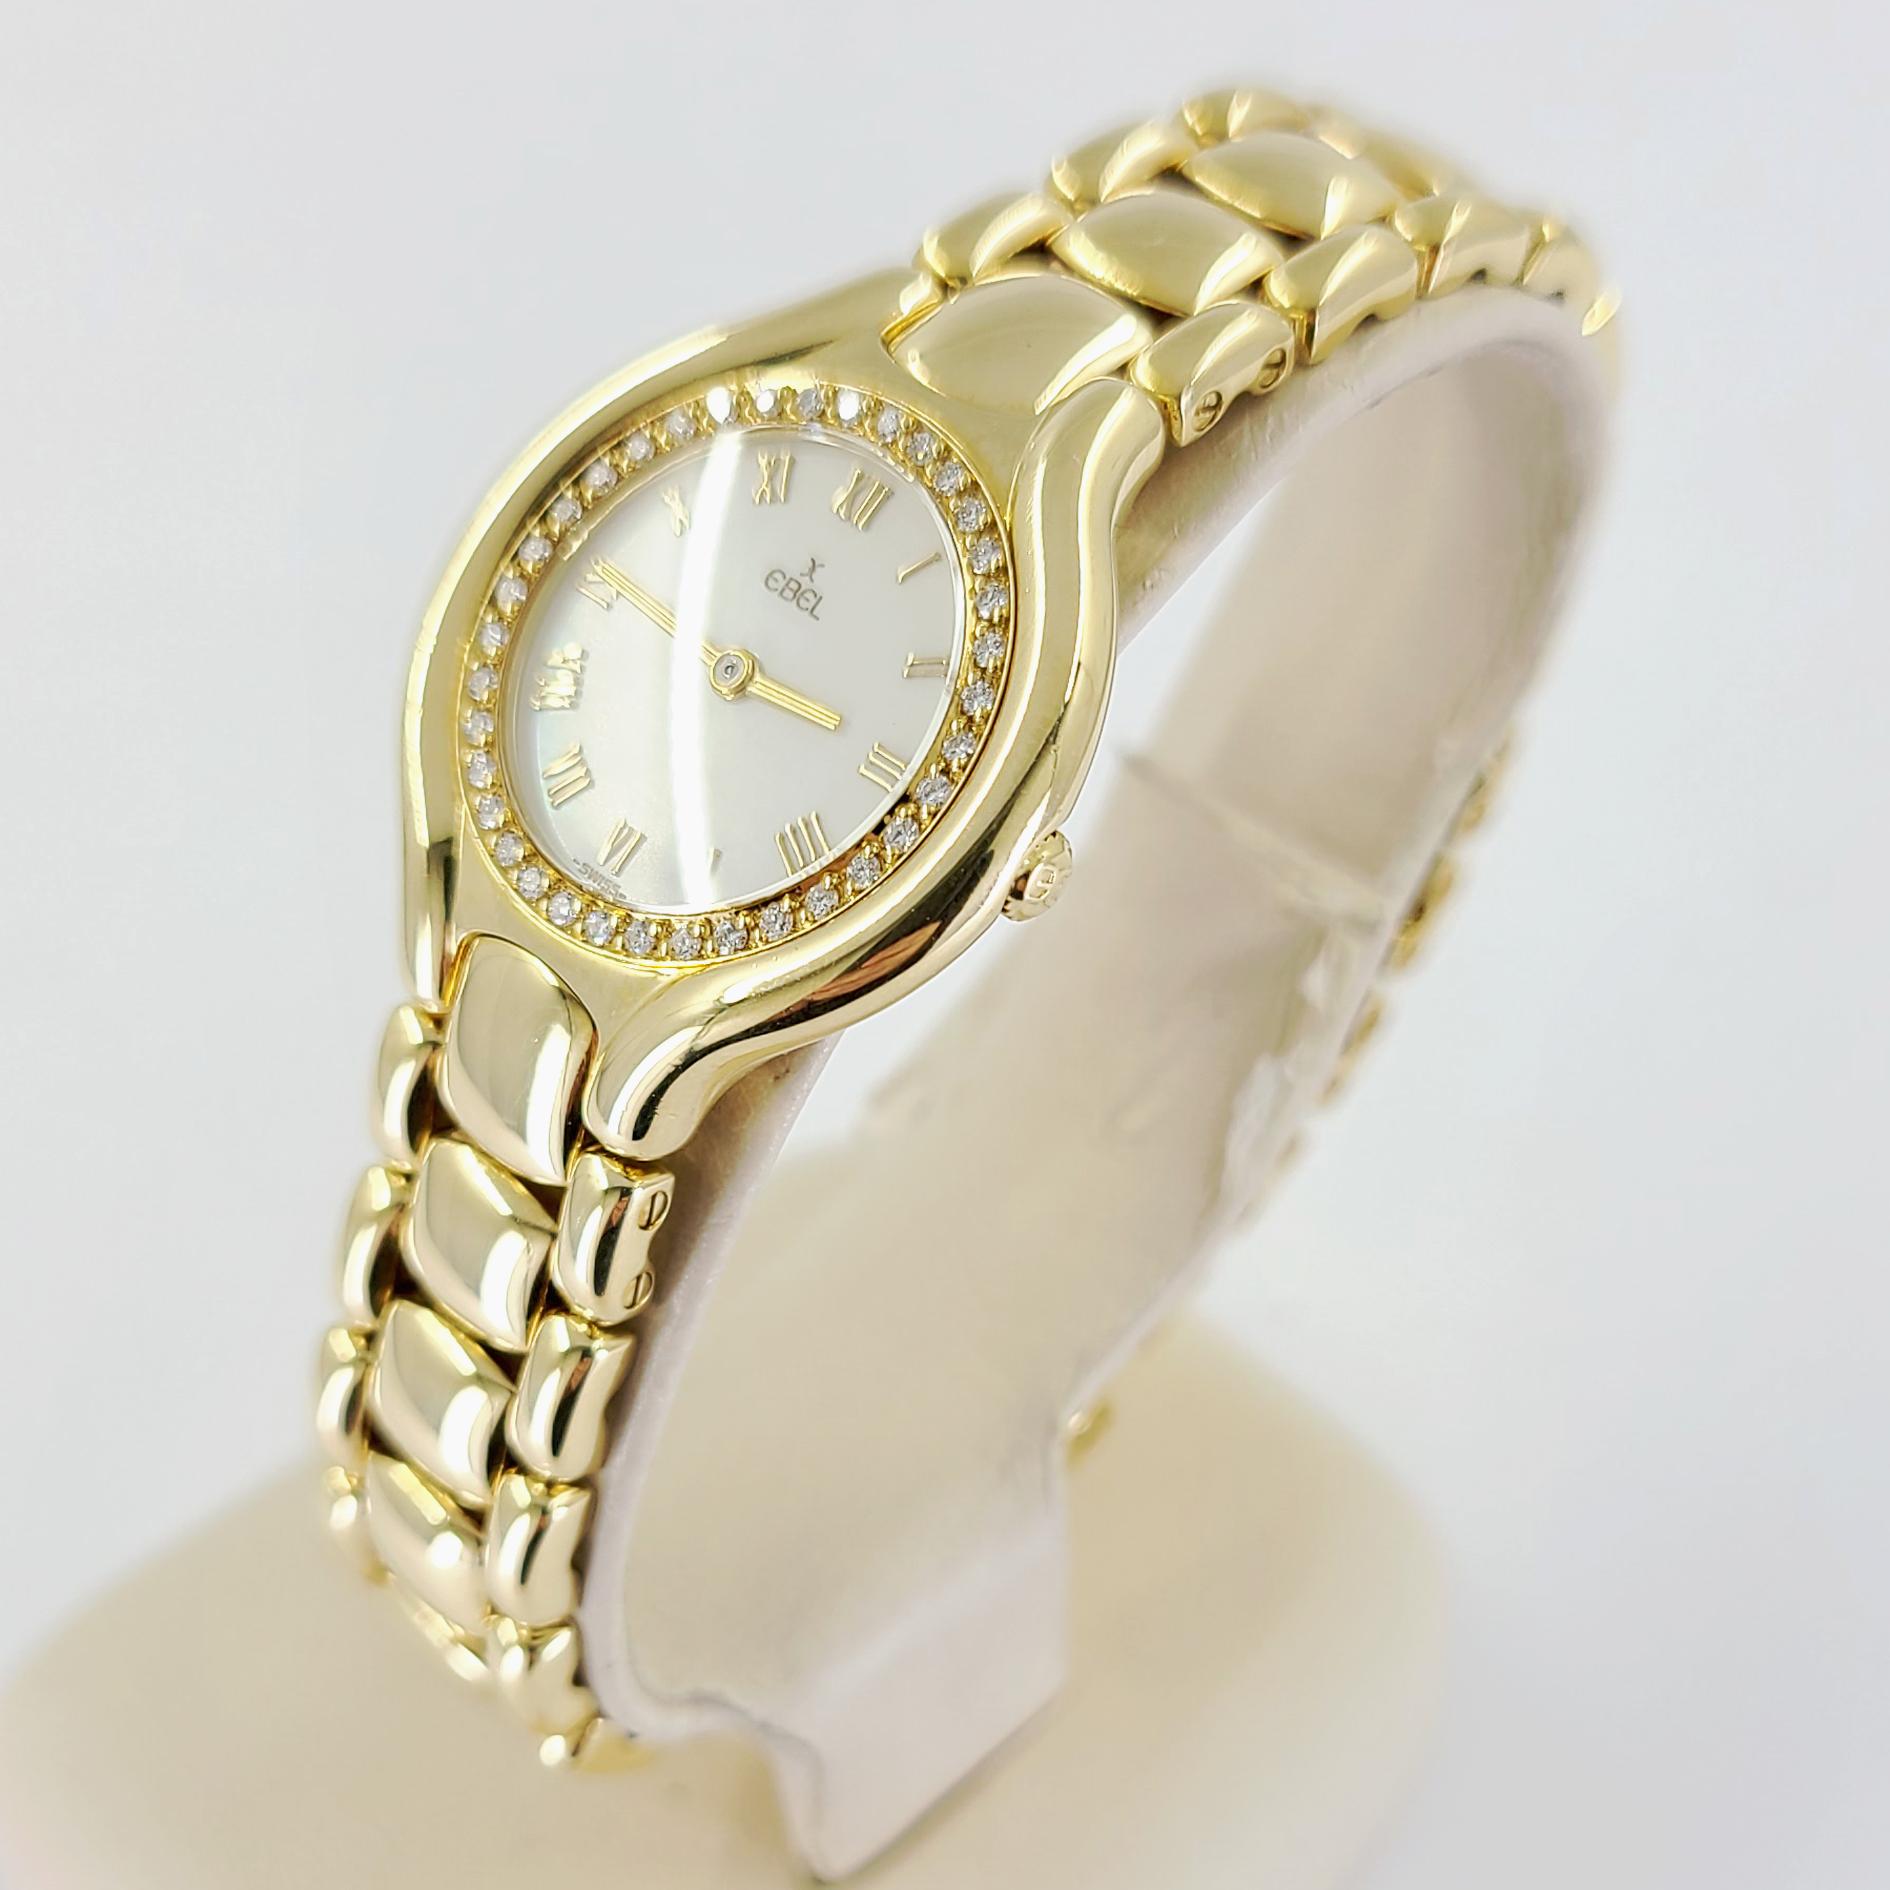 Ebel 18 Karat Yellow Gold Lady's Beluga Wristwatch, Diamonds & Mother of Pearl 1